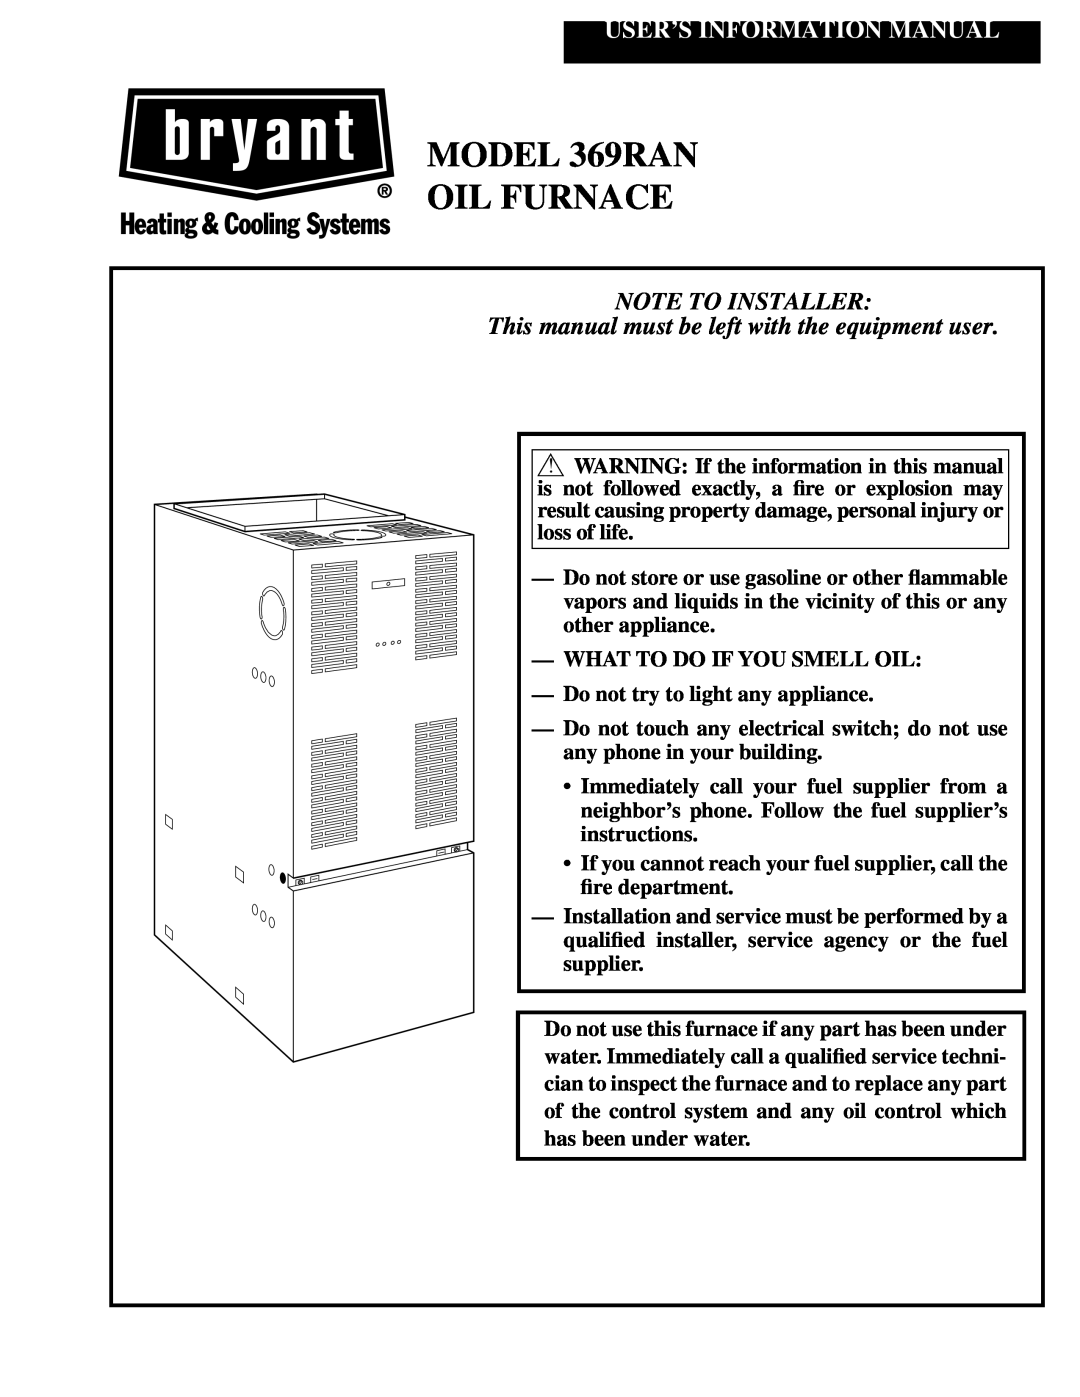 Bryant 185248 manual MODEL 369RAN OIL FURNACE, User’S Information Manual, Note To Installer 